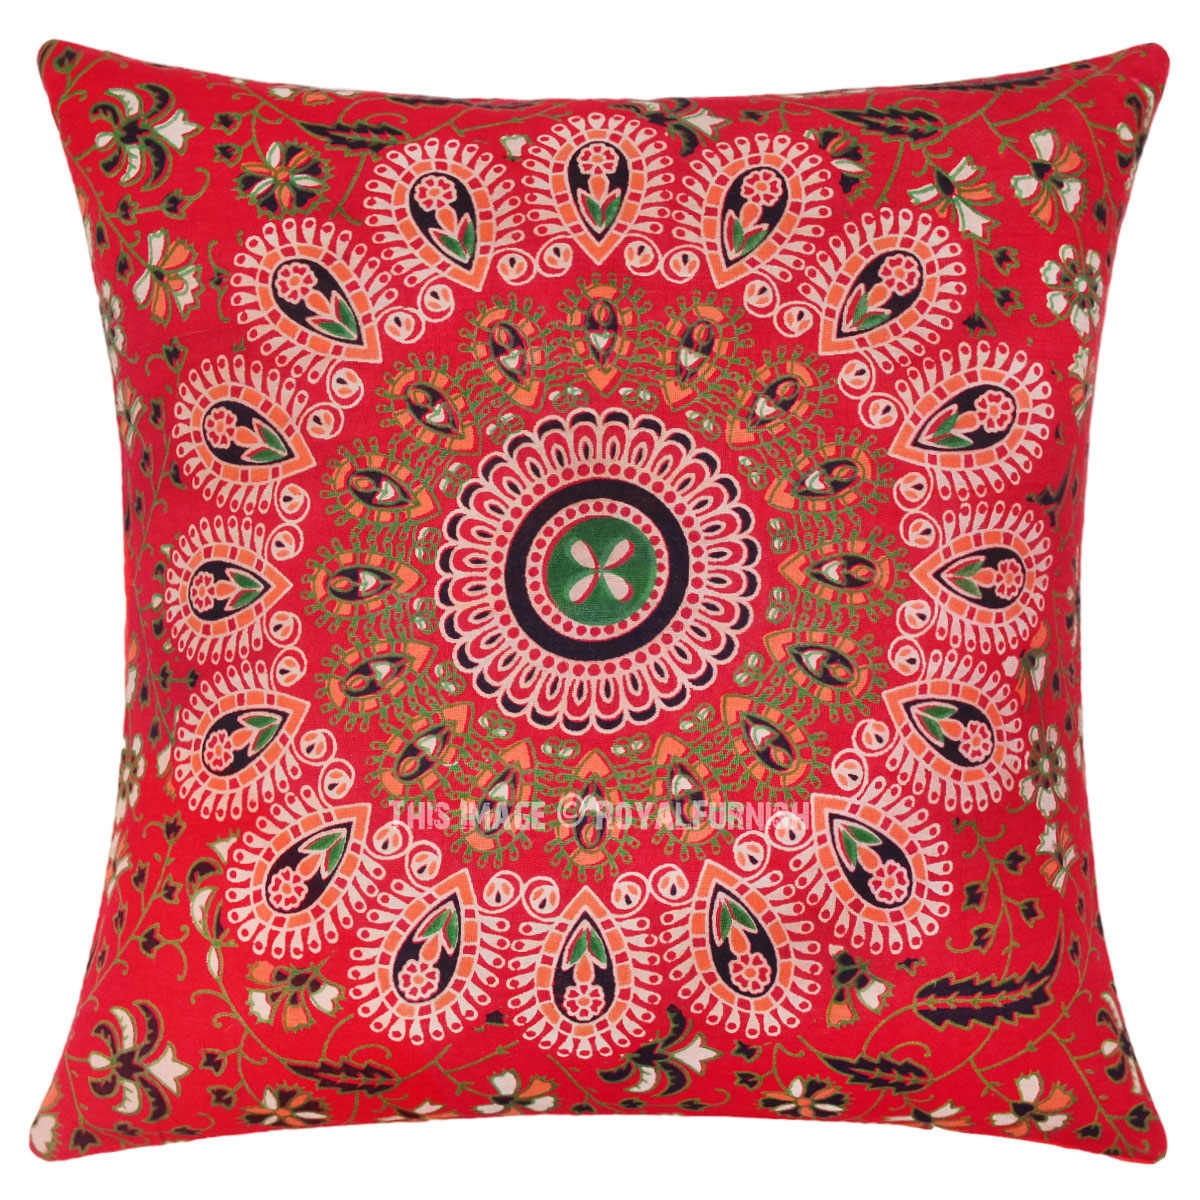 Vibrant Red Mandala Throw Pillow Cover - RoyalFurnish.com